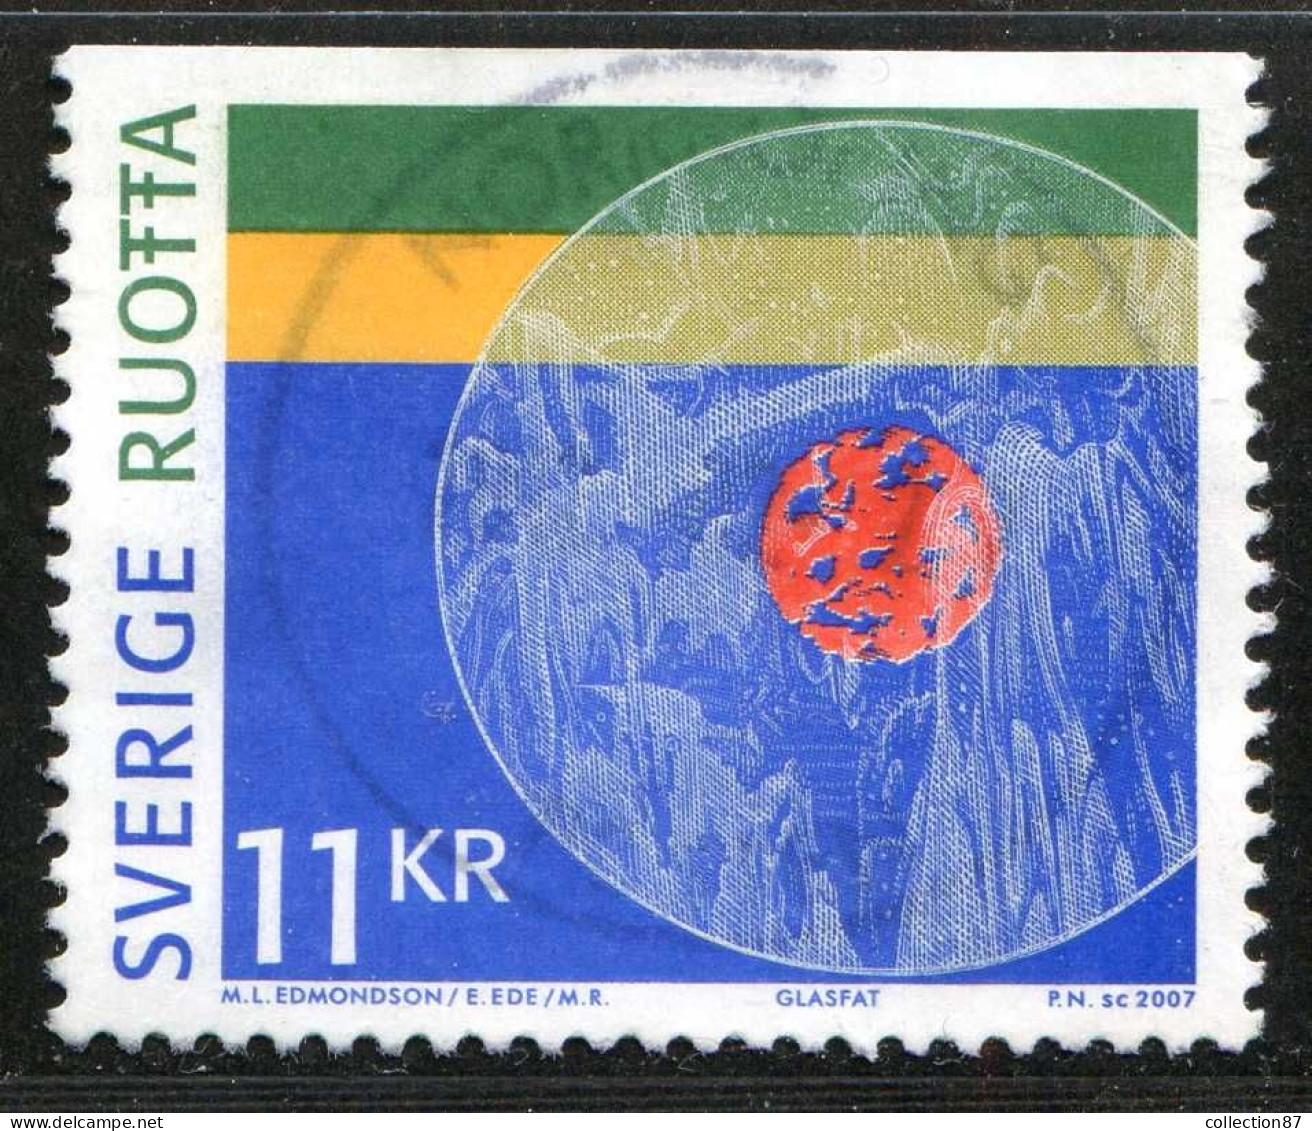 Réf 77 < SUEDE Année 2007 < Yvert N° 2599 Ø Used < SWEDEN < Culture Des Samis En Laponie - Used Stamps